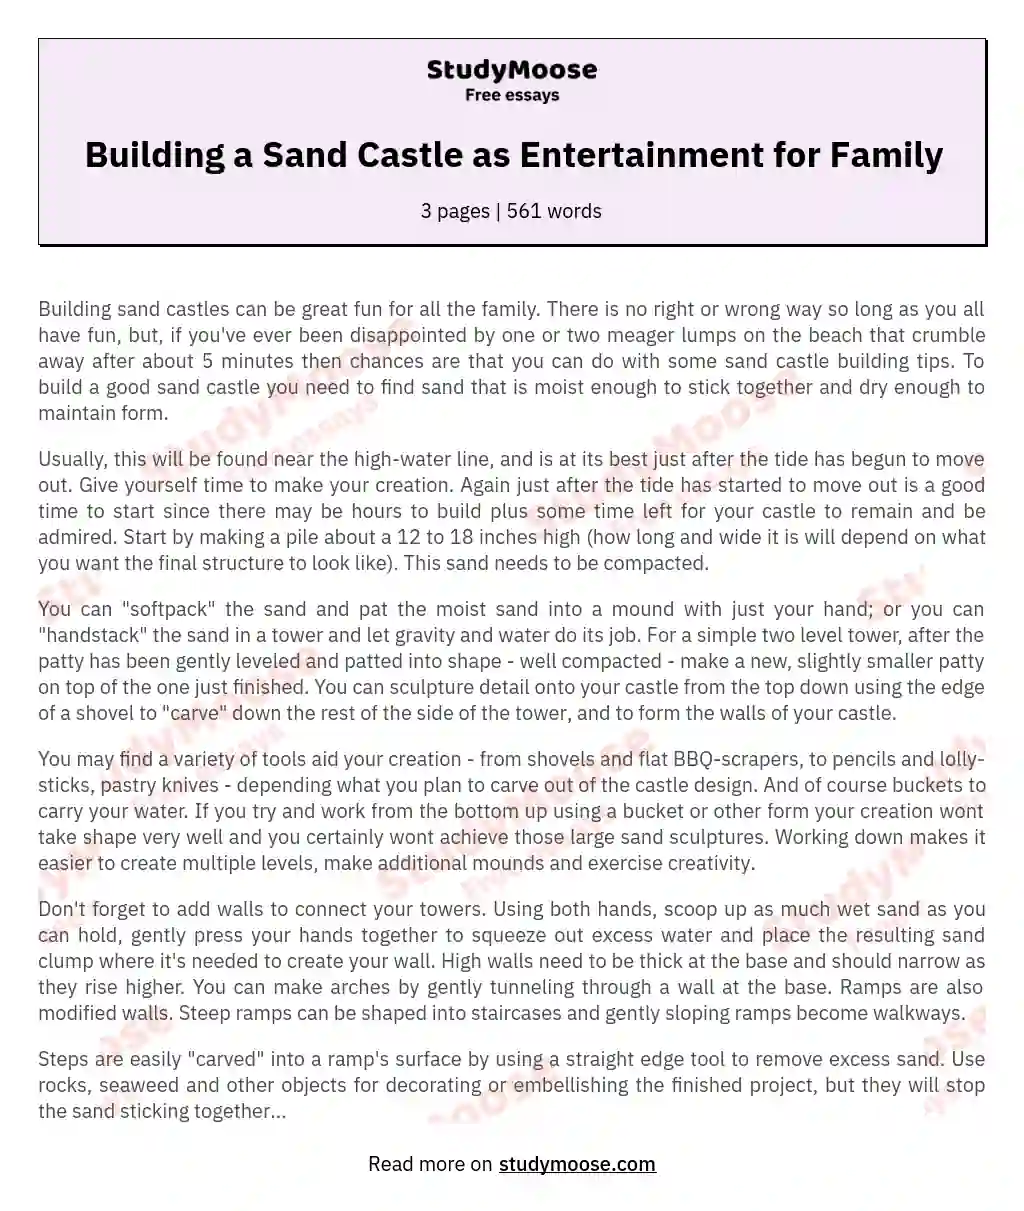 Building a Sand Castle as Entertainment for Family essay